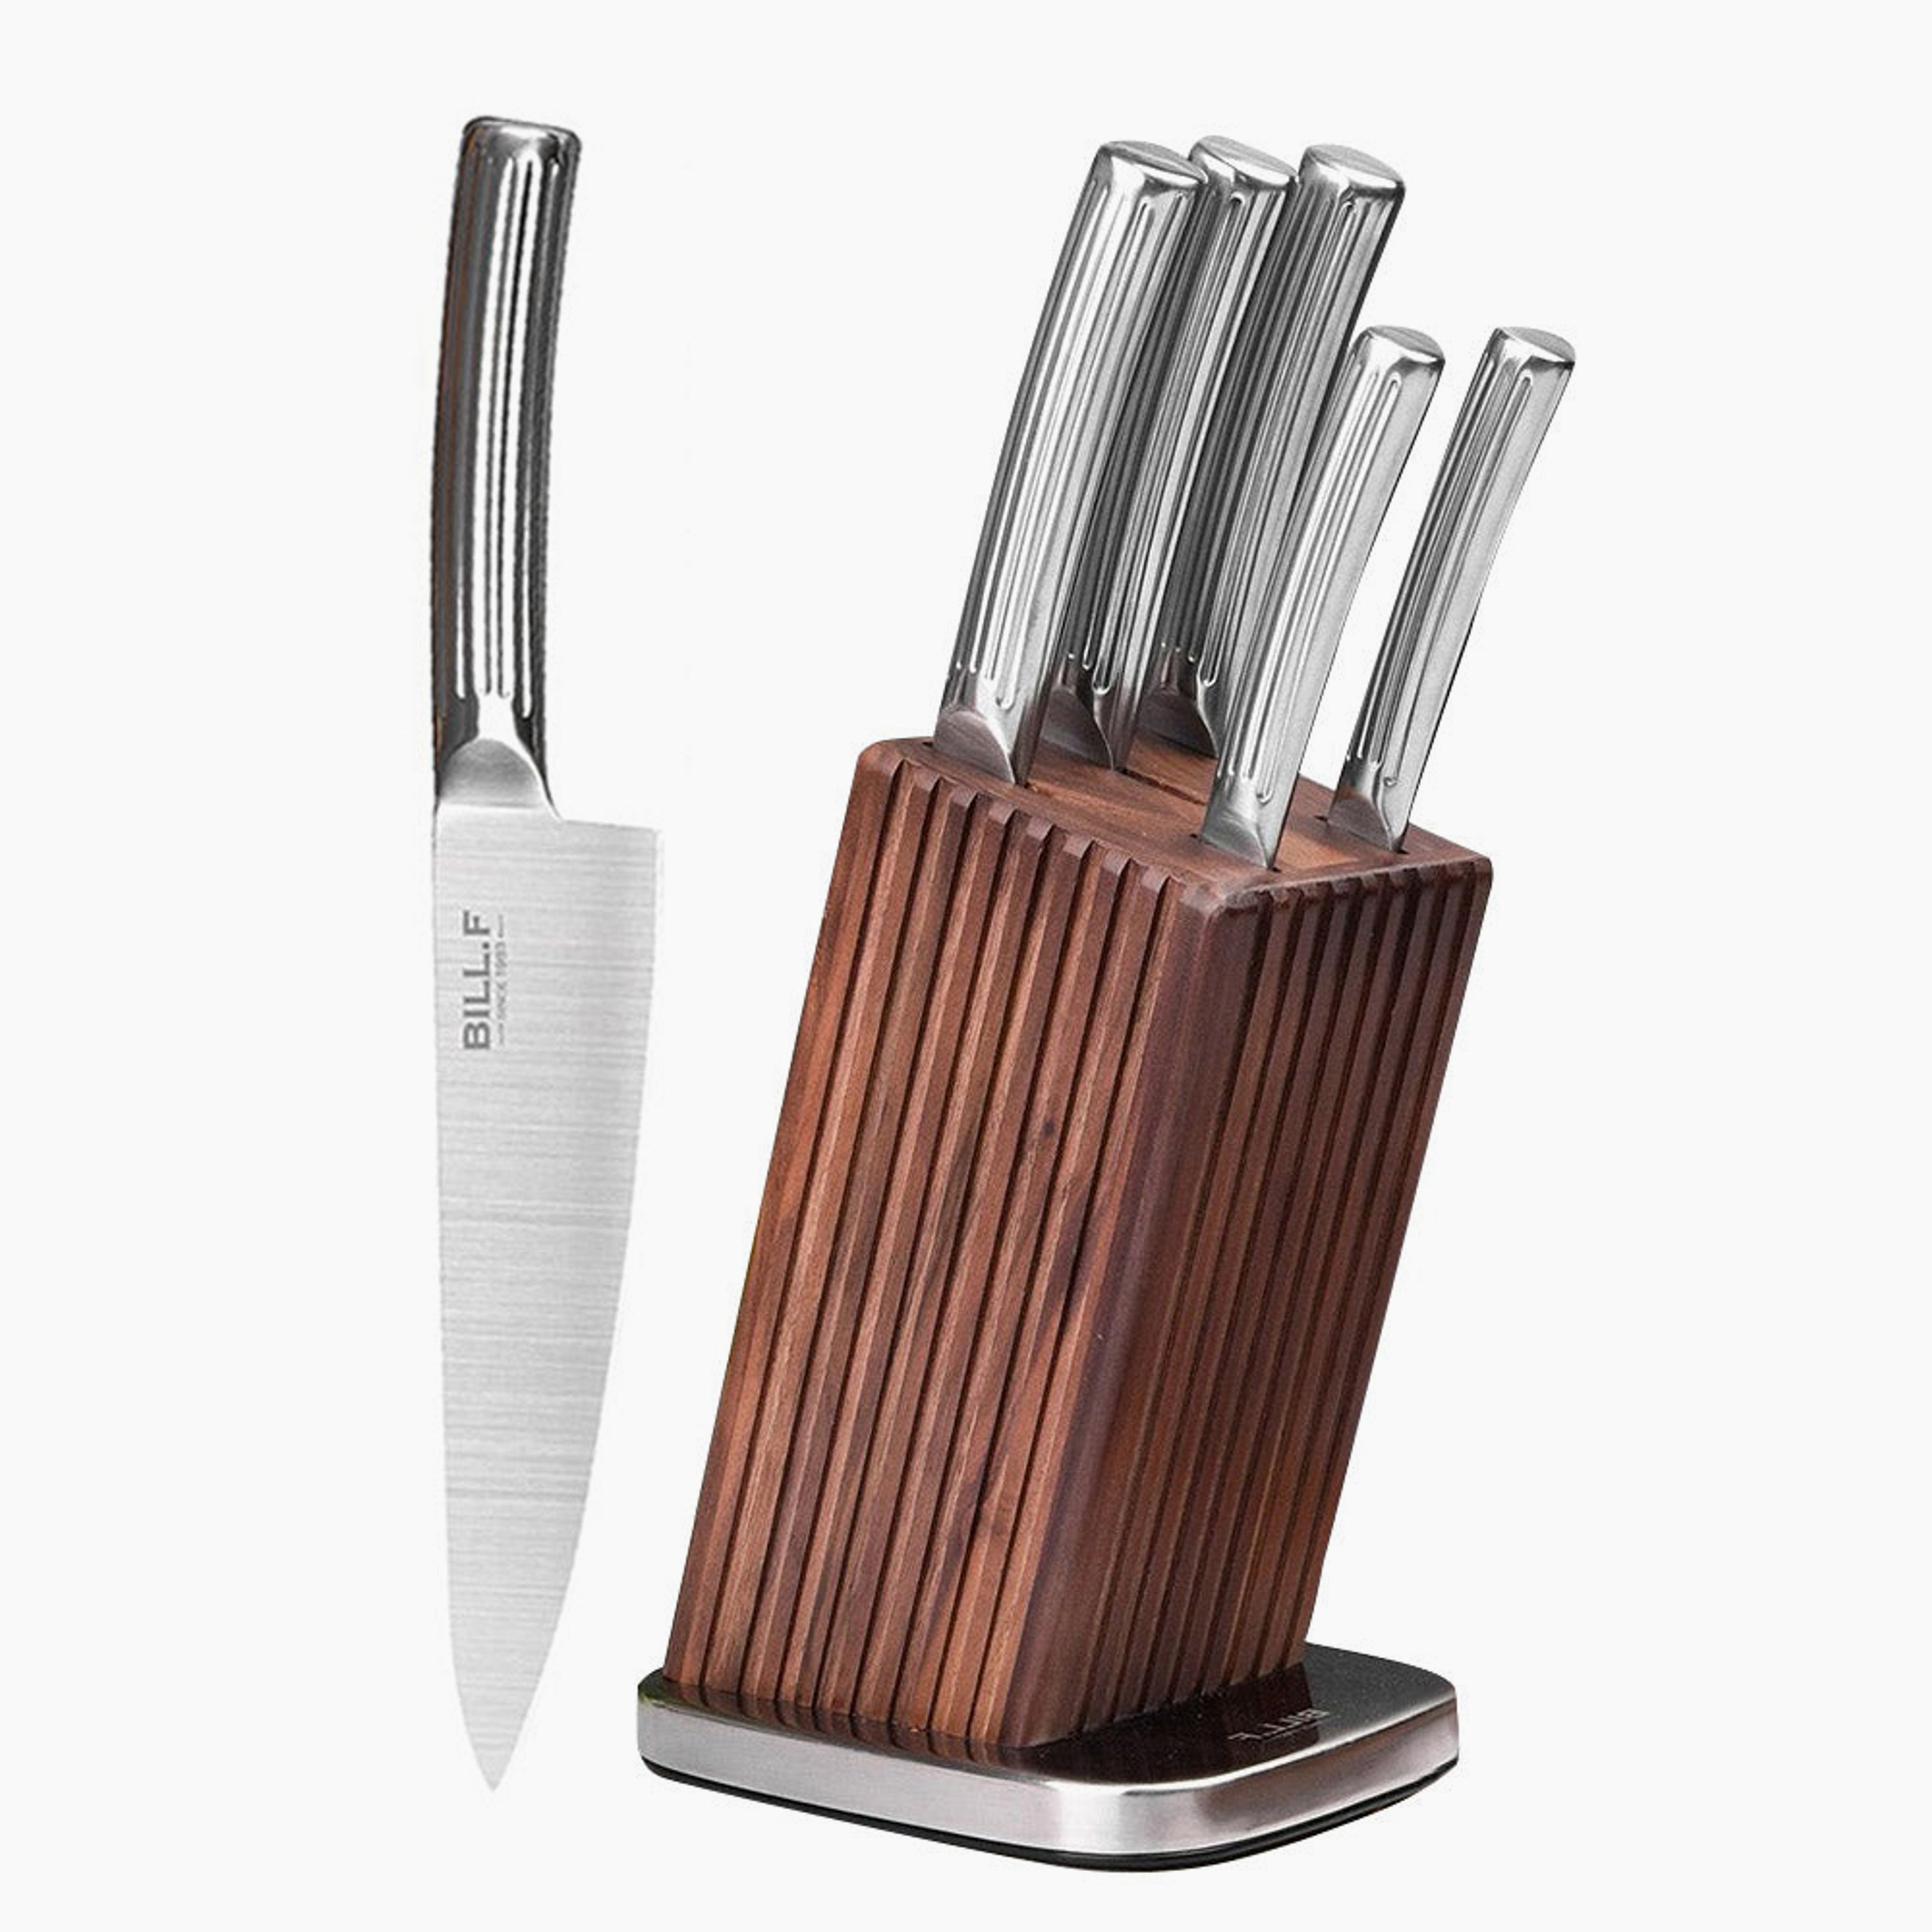 Buy 1 get 1 FREE - 6-Piece Kitchen Knives German Stainless Steel Kitchen Knife Block Set